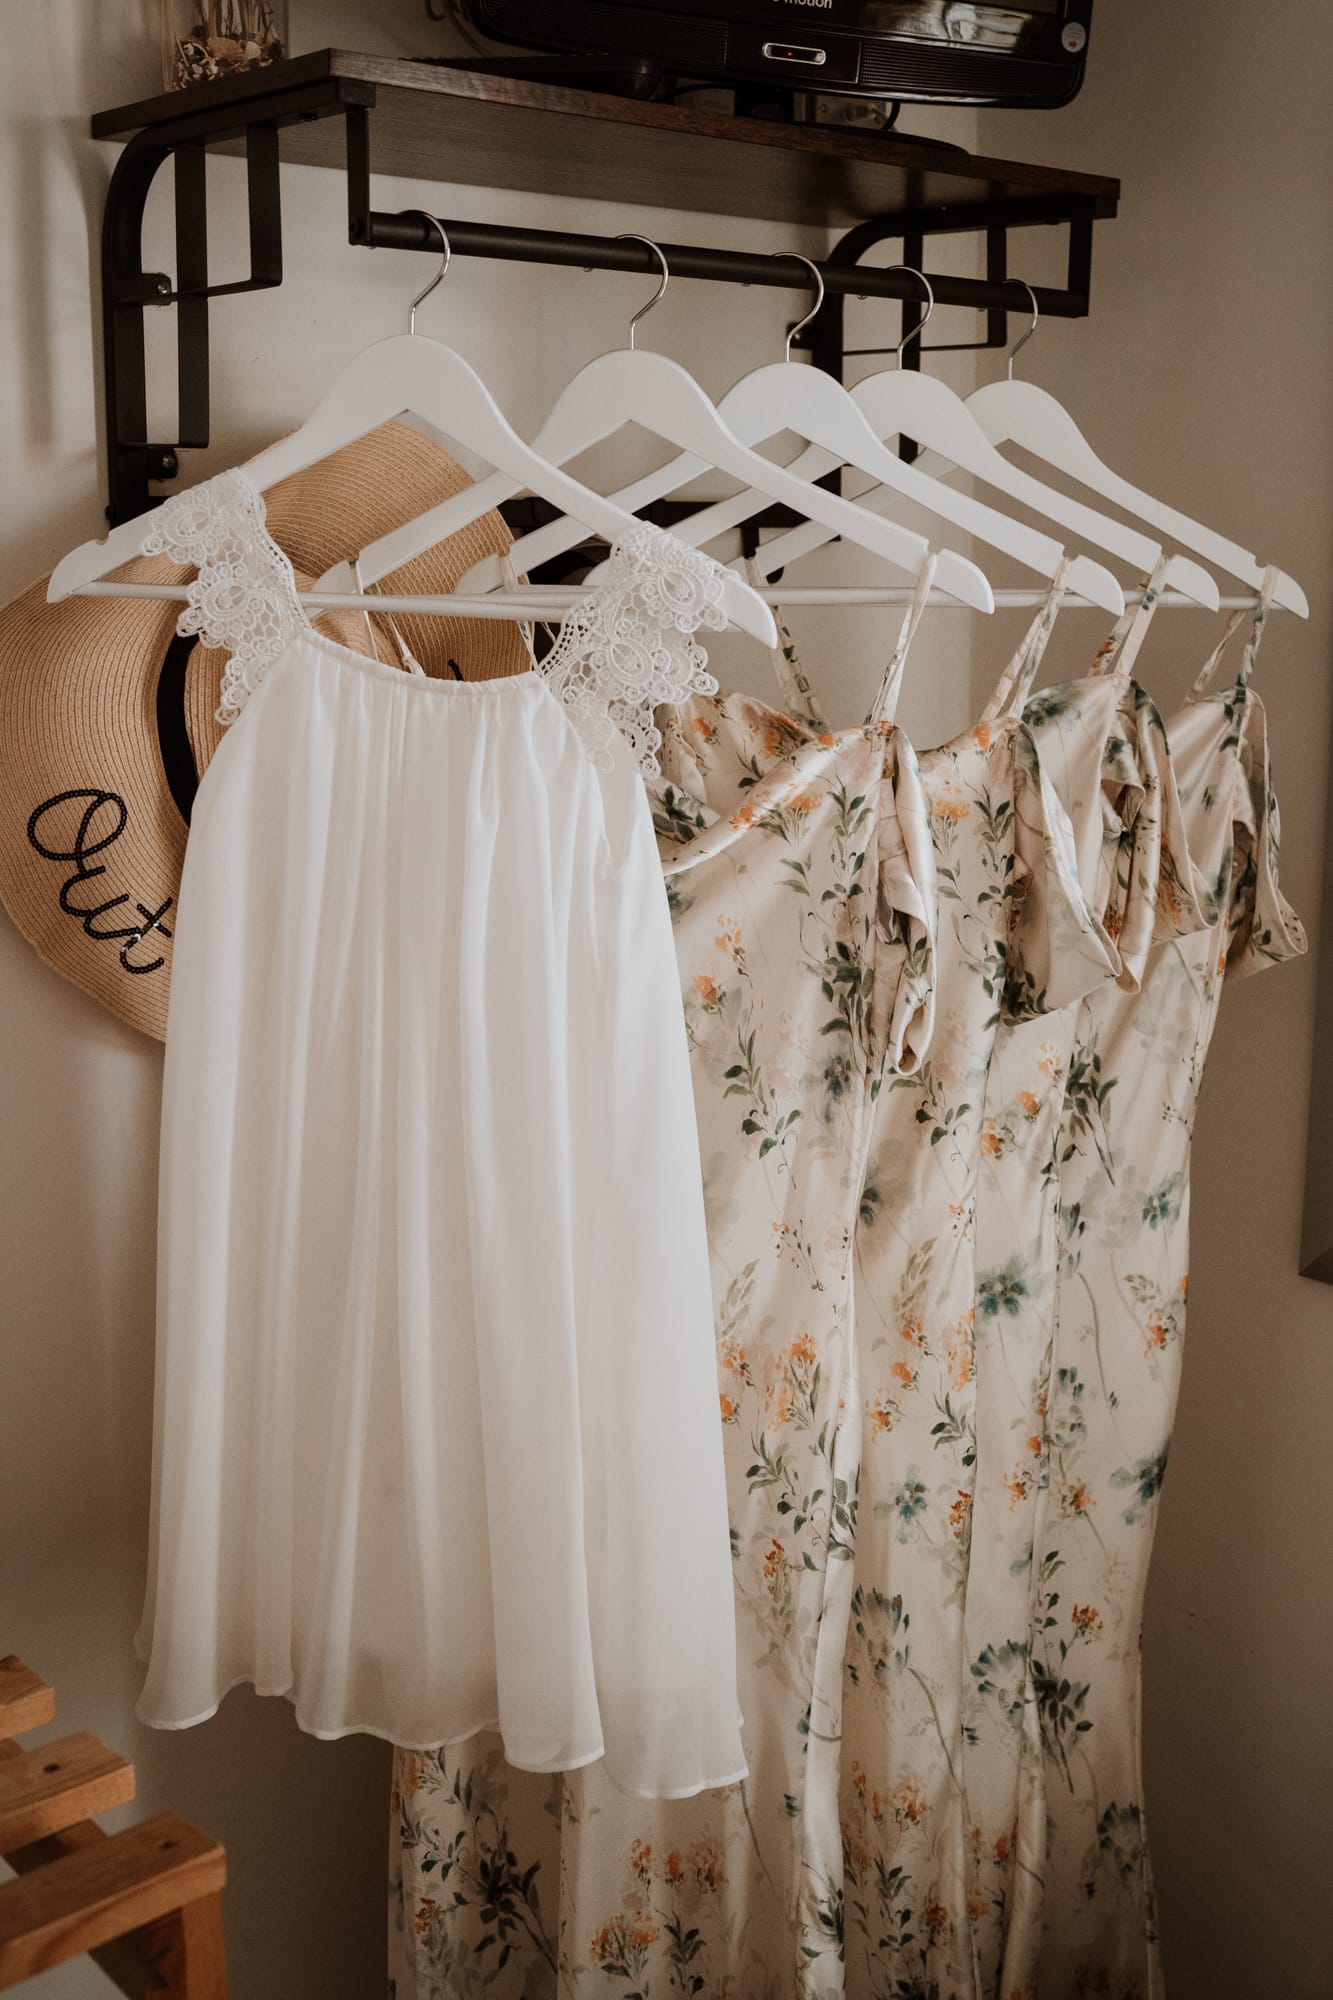 Line of bridesmaids dresses hung up